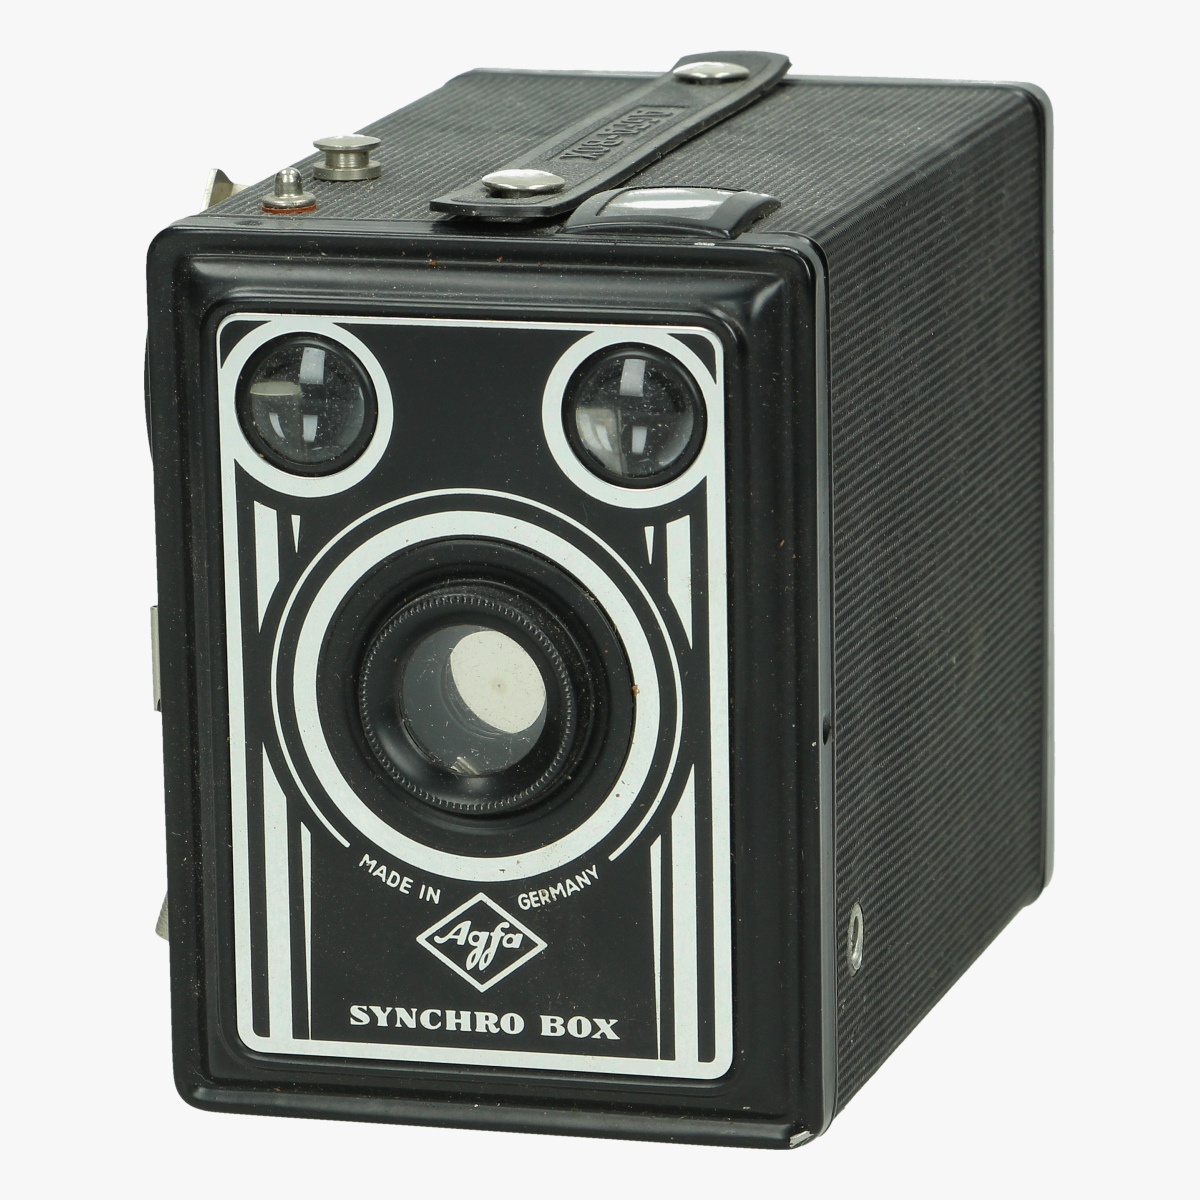 Afbeeldingen van fotocamera AGFA SYNCHRO BOX MADE IN GERMANY